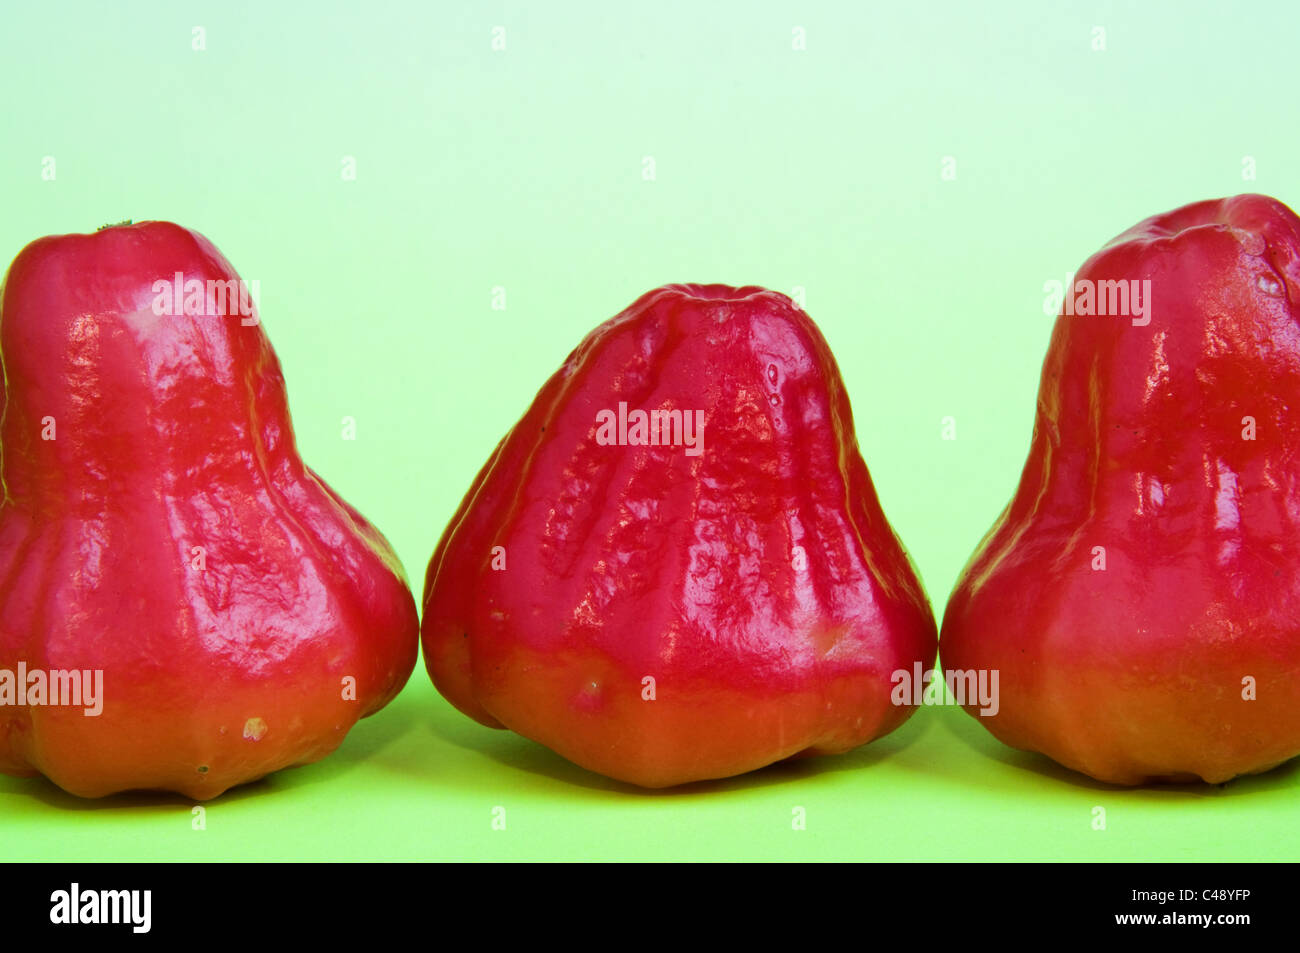 jambu fruit Stock Photo